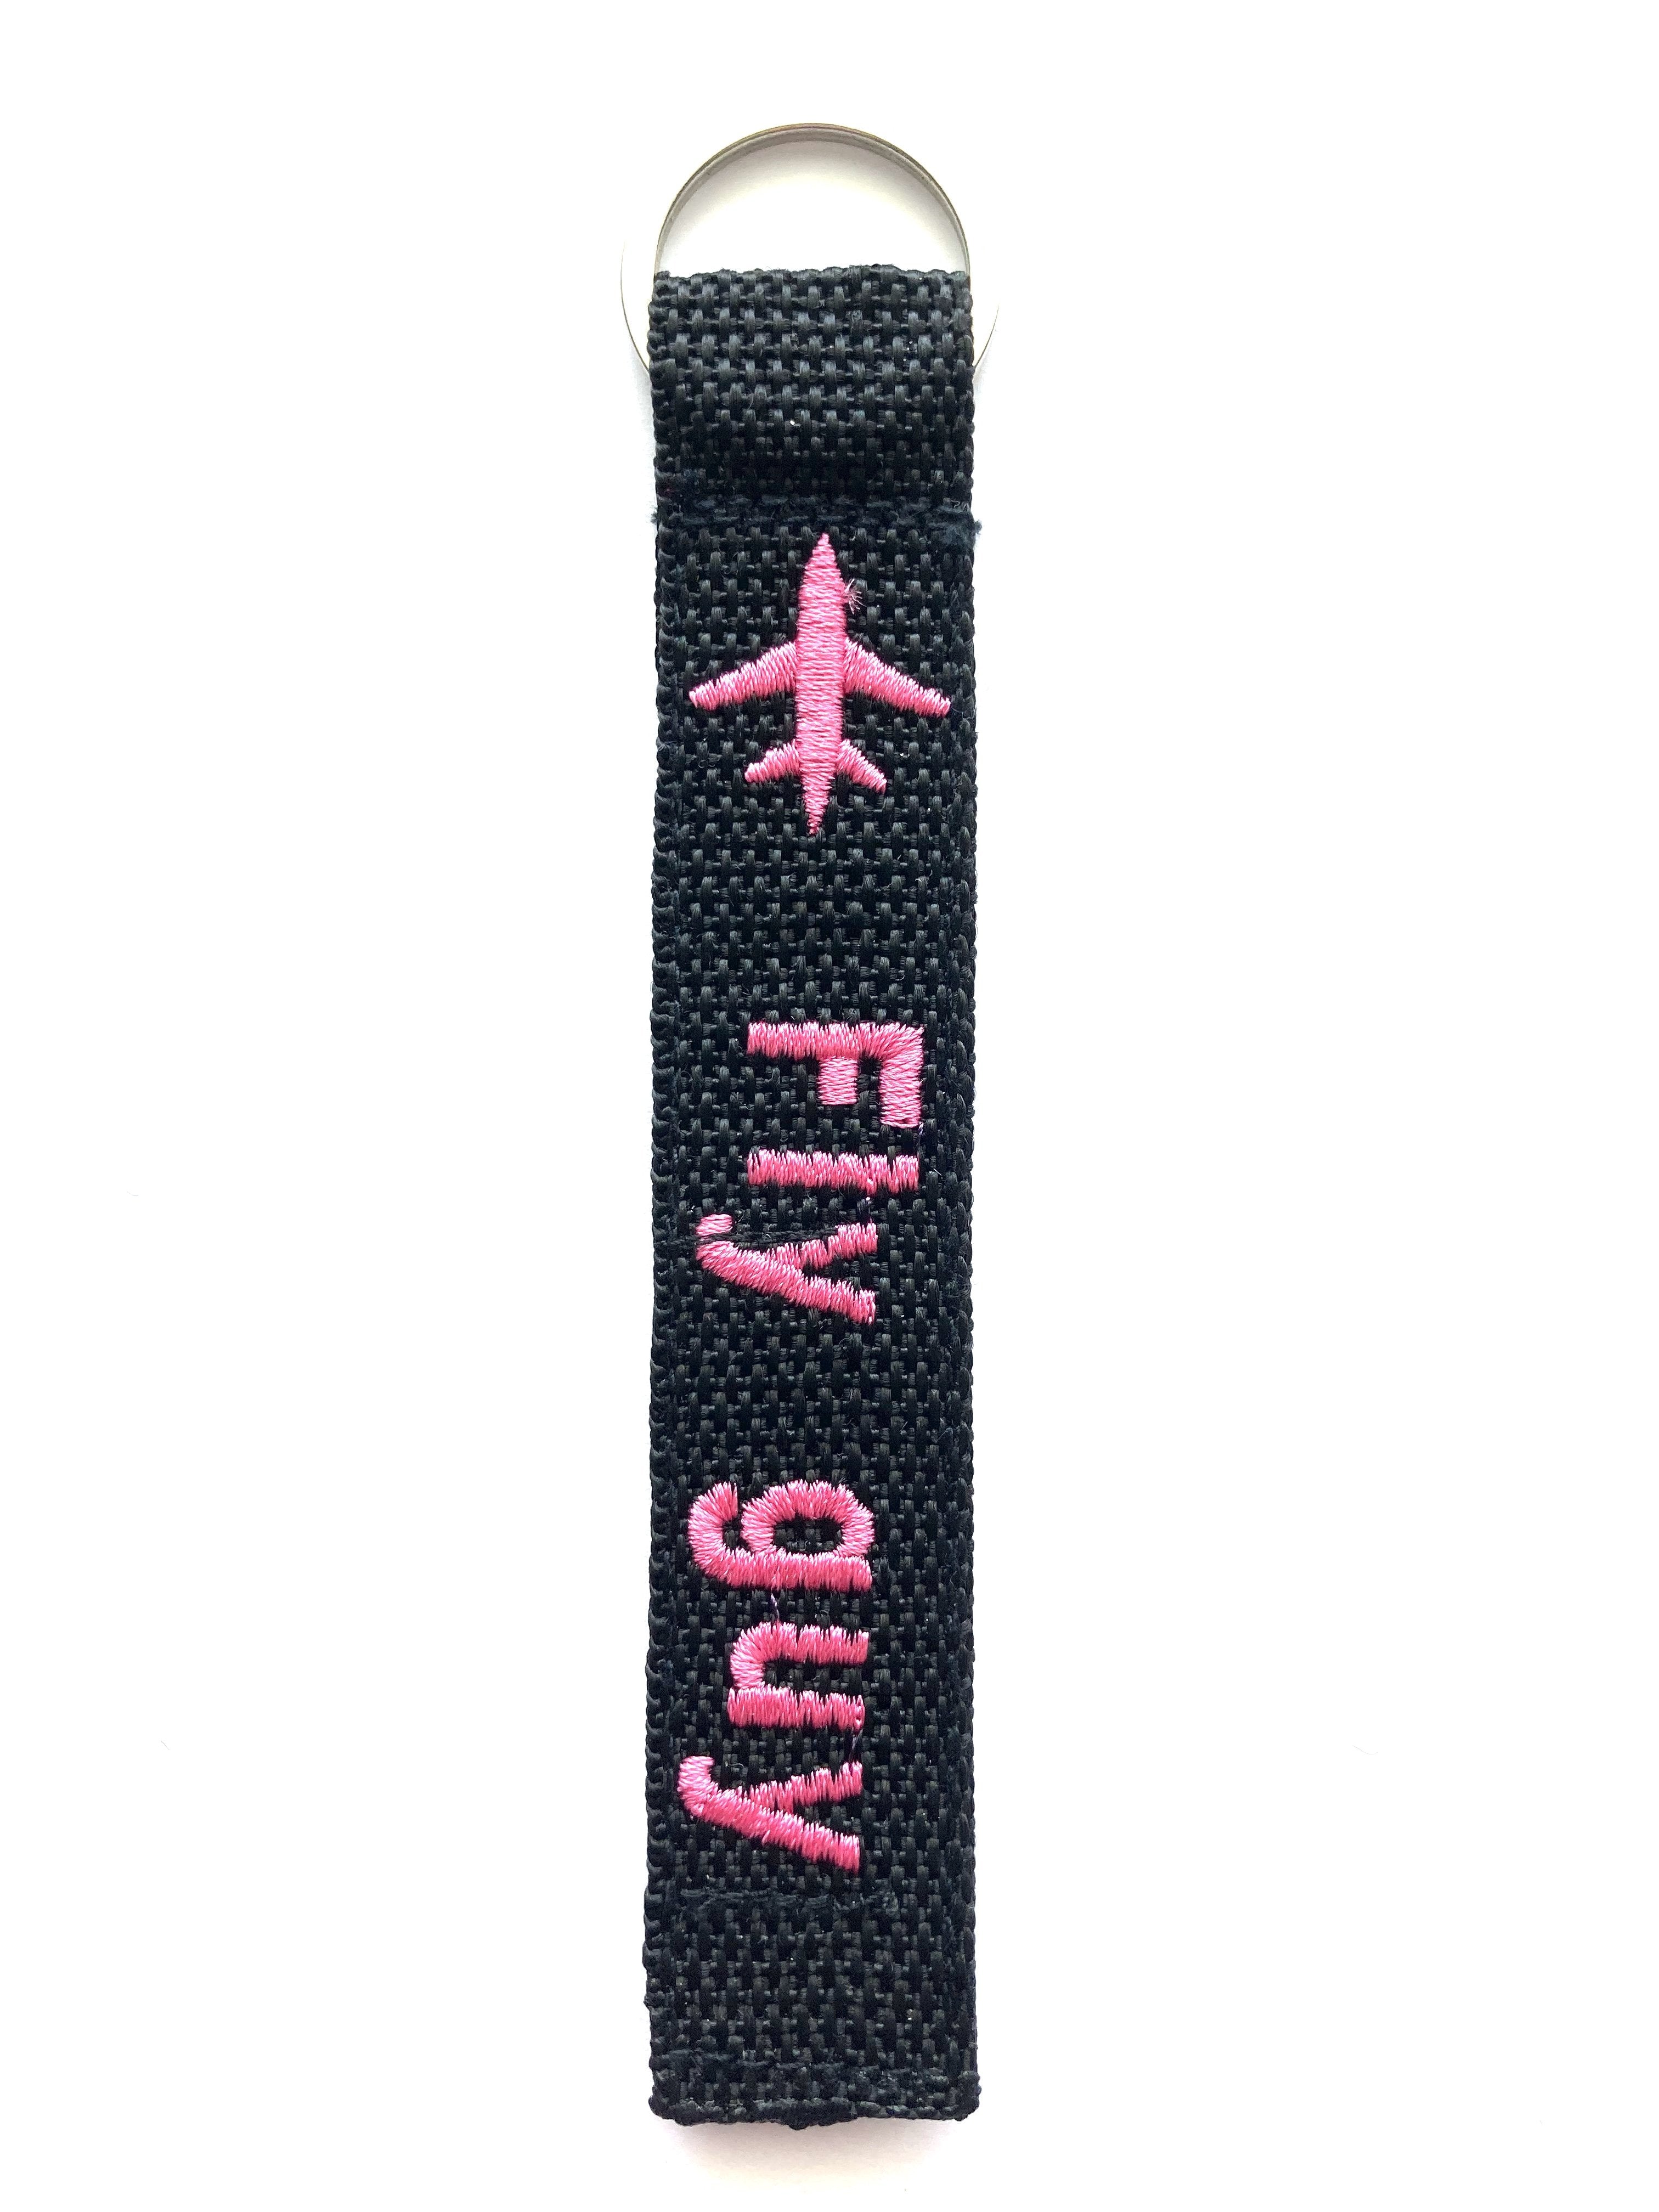 Fly guy - Crew Key Ring Pink